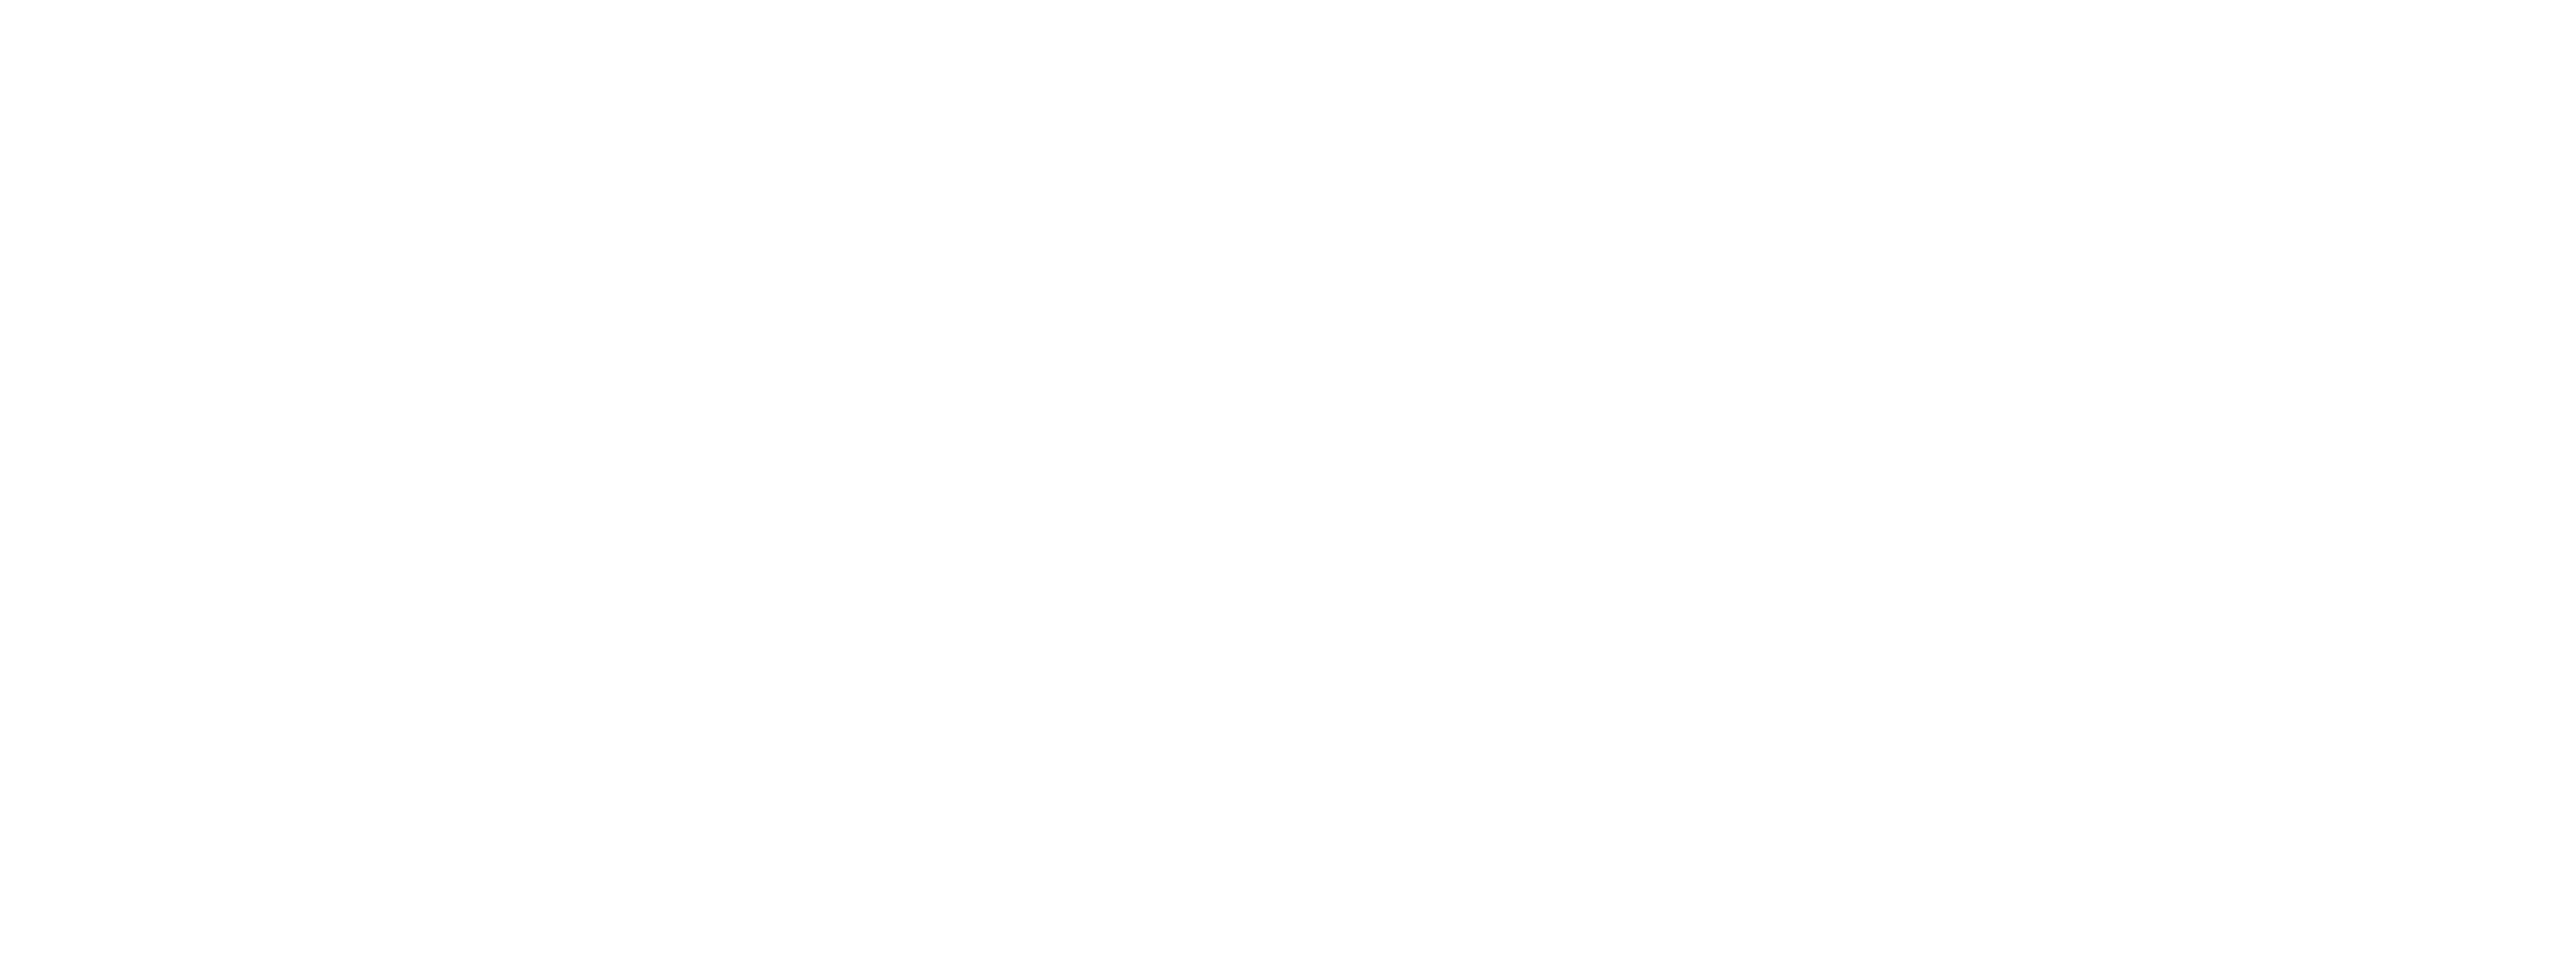 Bigfoot Adventure Academy